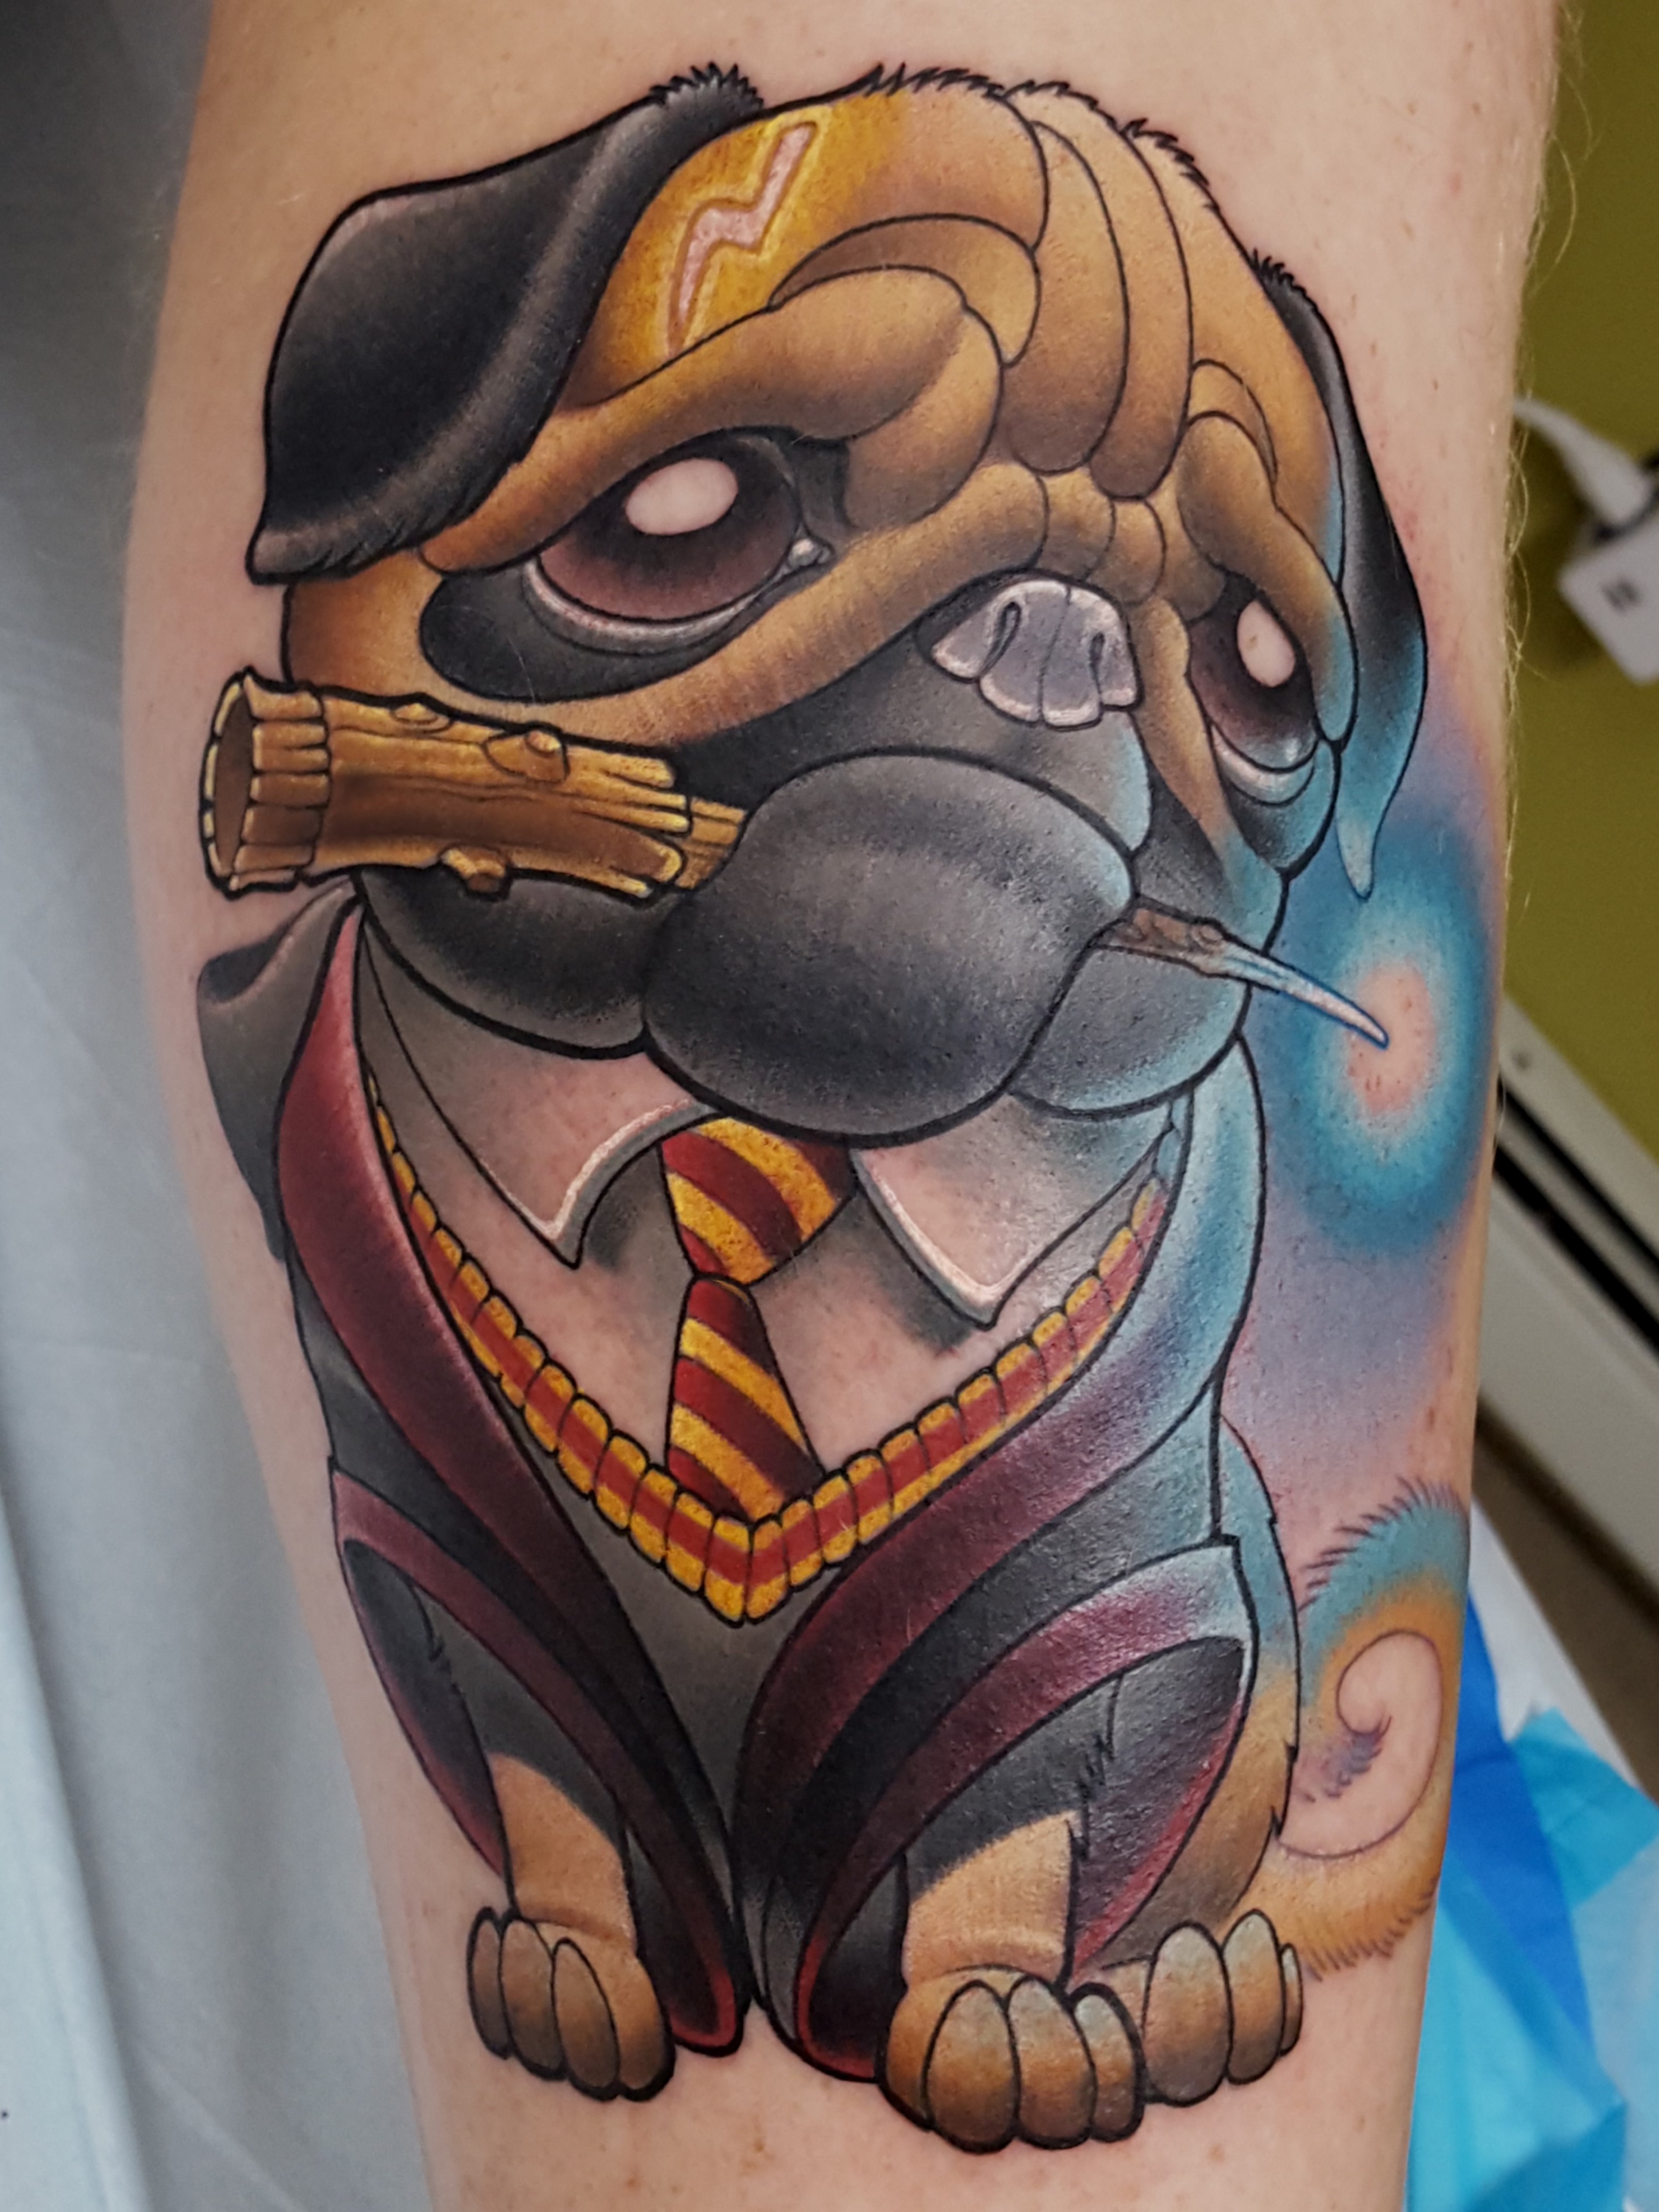 Harry Potter pug tattoo by CT artist Cracker Joe Swider